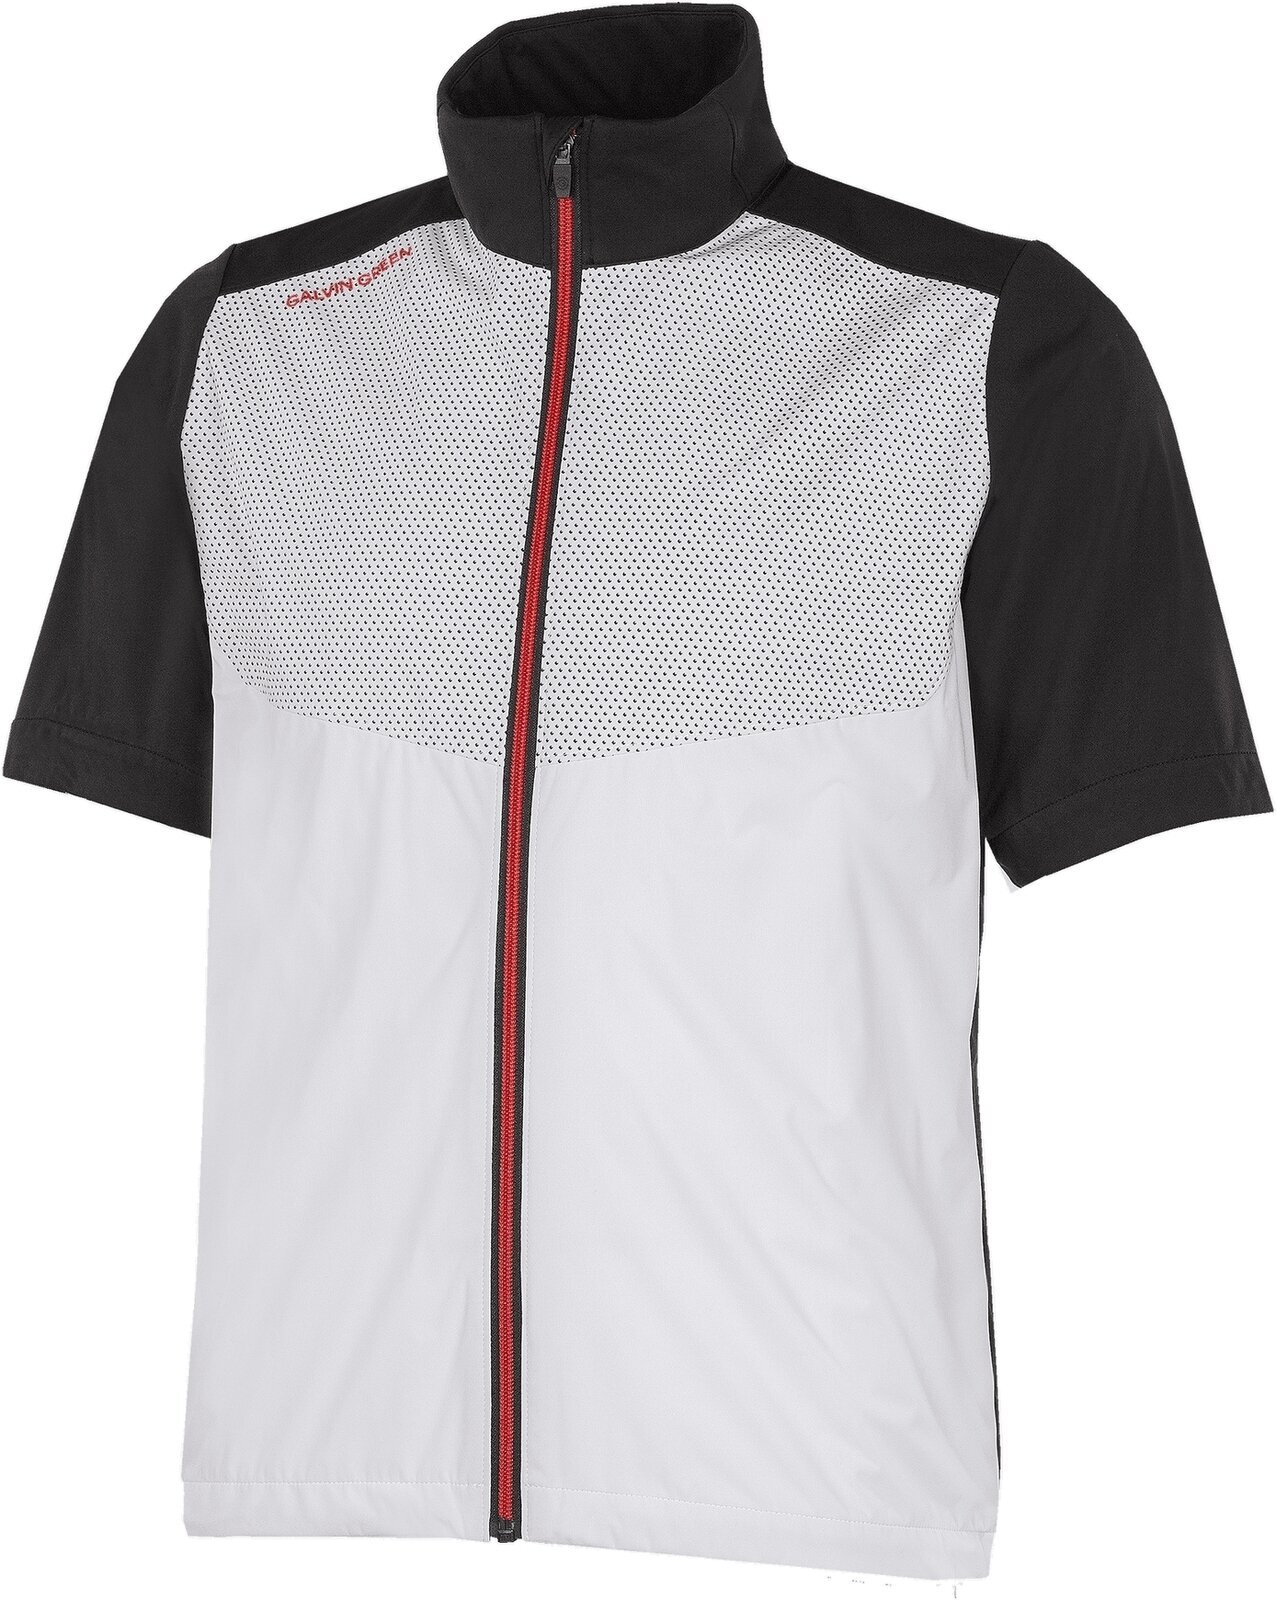 Veste Galvin Green Livingston Mens Windproof And Water Repellent Short Sleeve Jacket White/Black/Red M